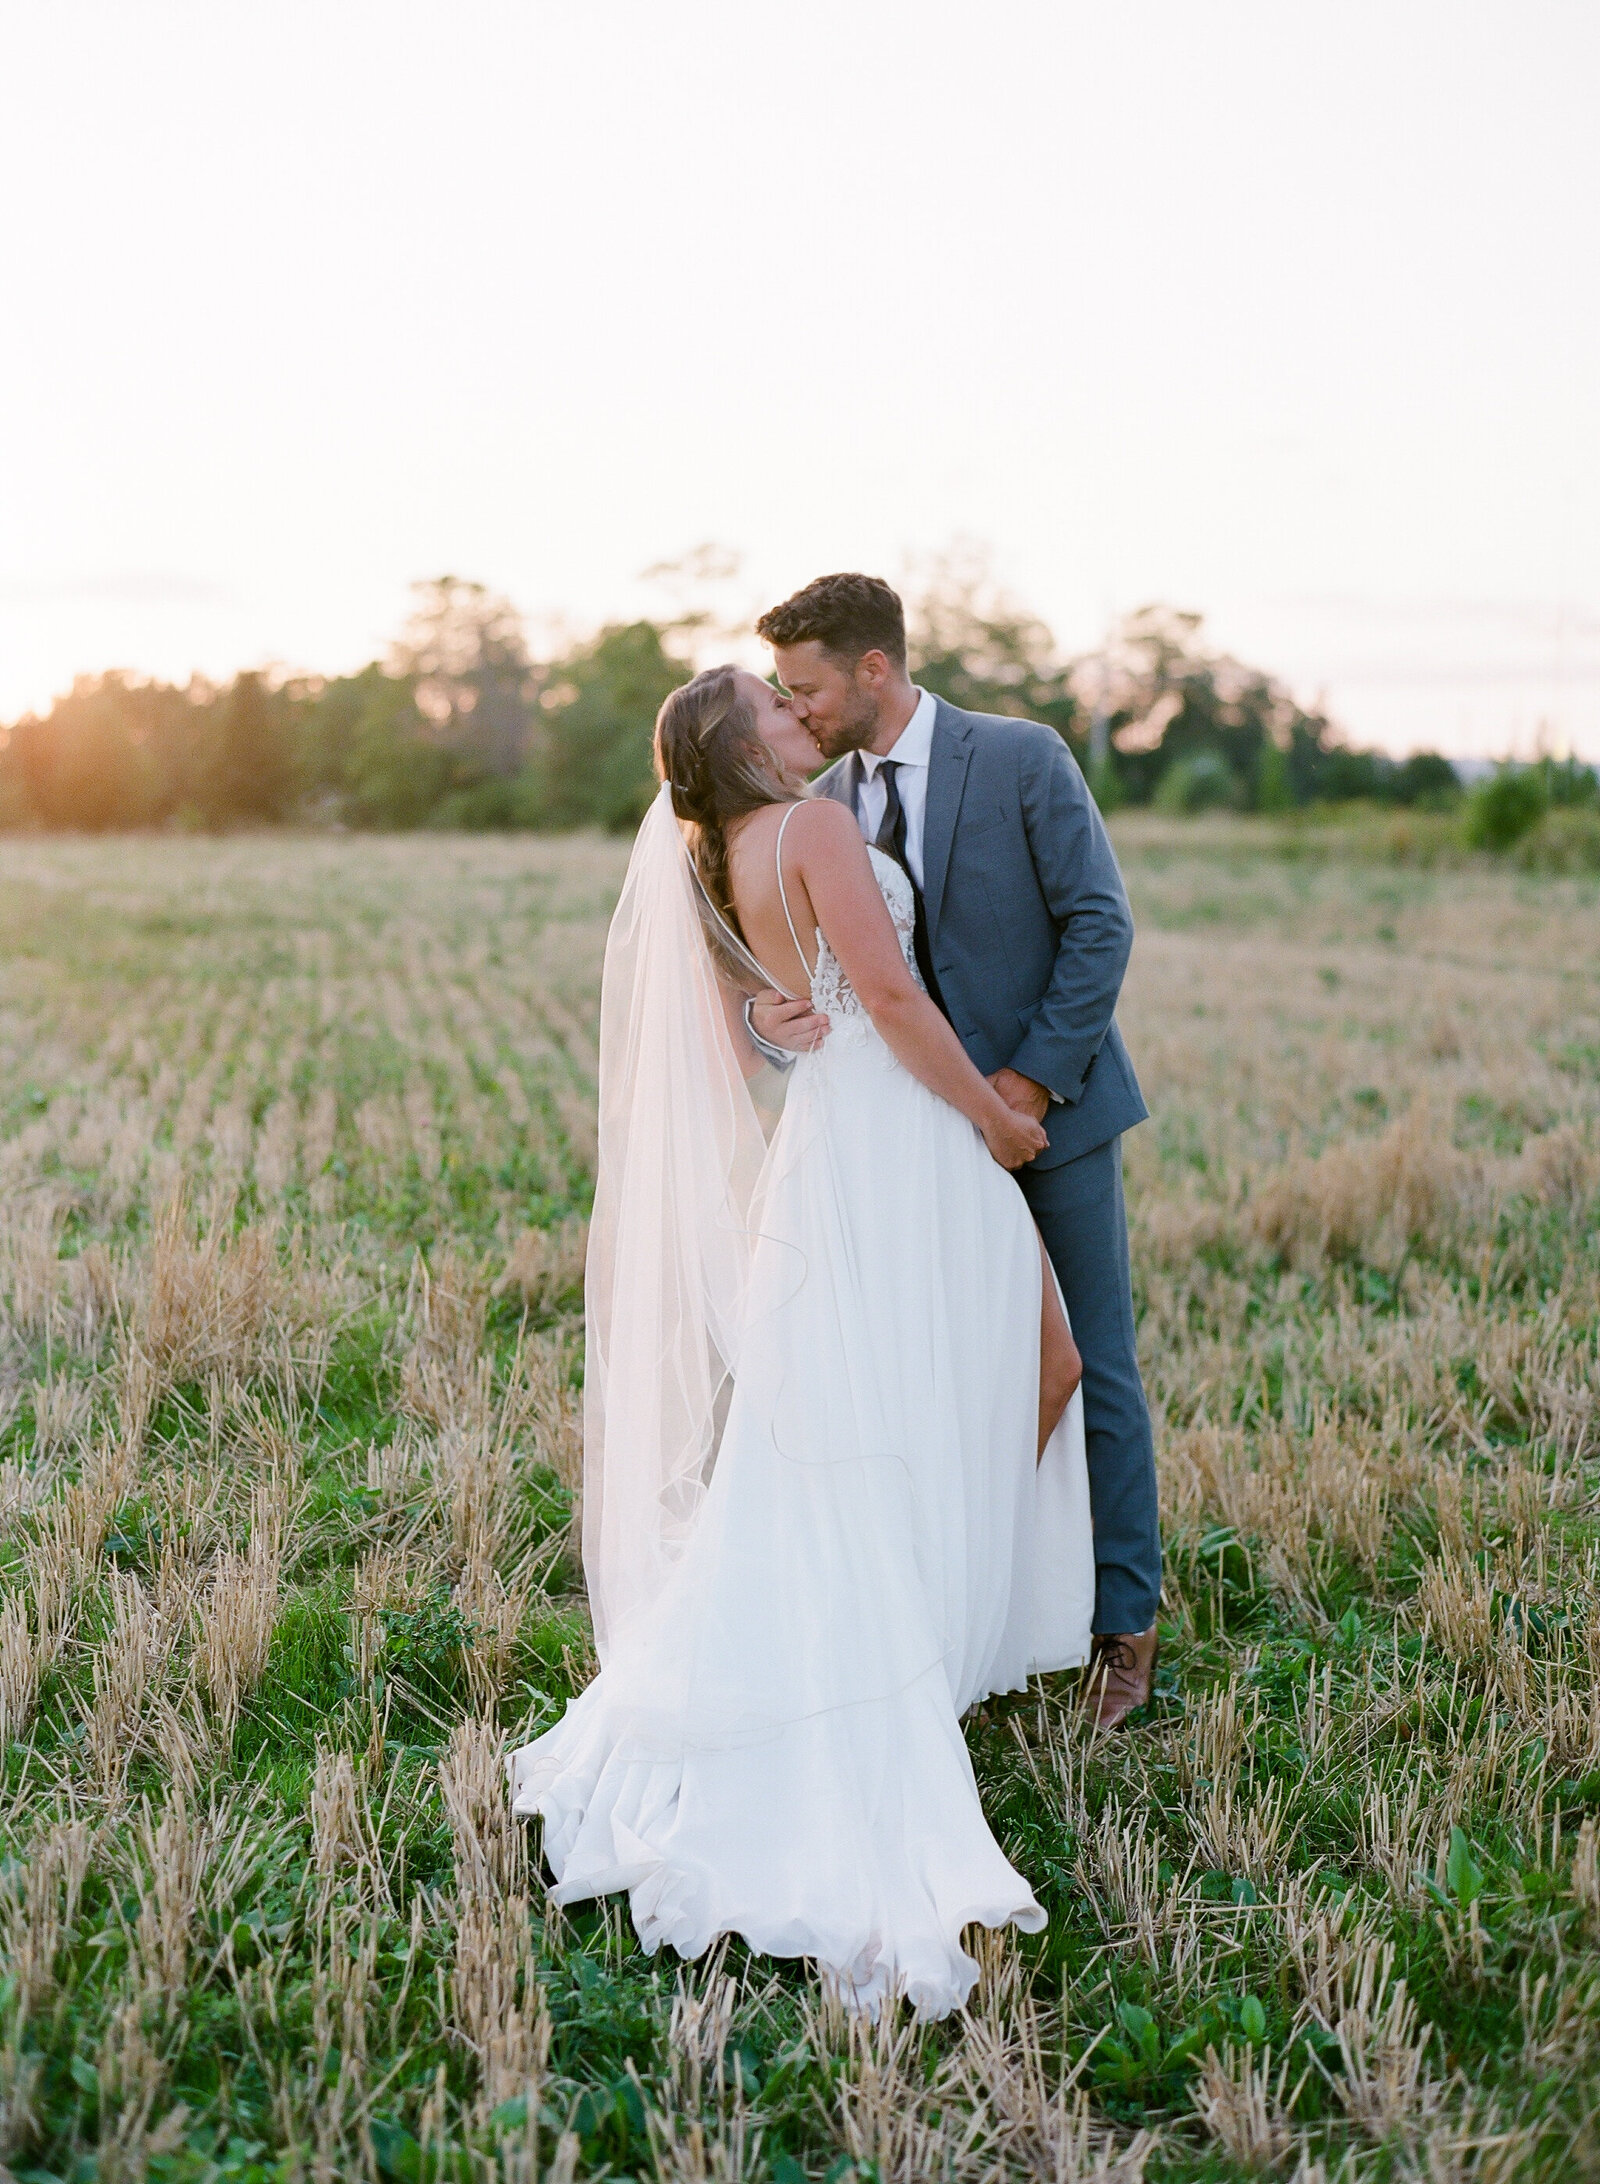 Jacqueline Anne Photography - Halifax Wedding Photographer - Samantha and Greg-582